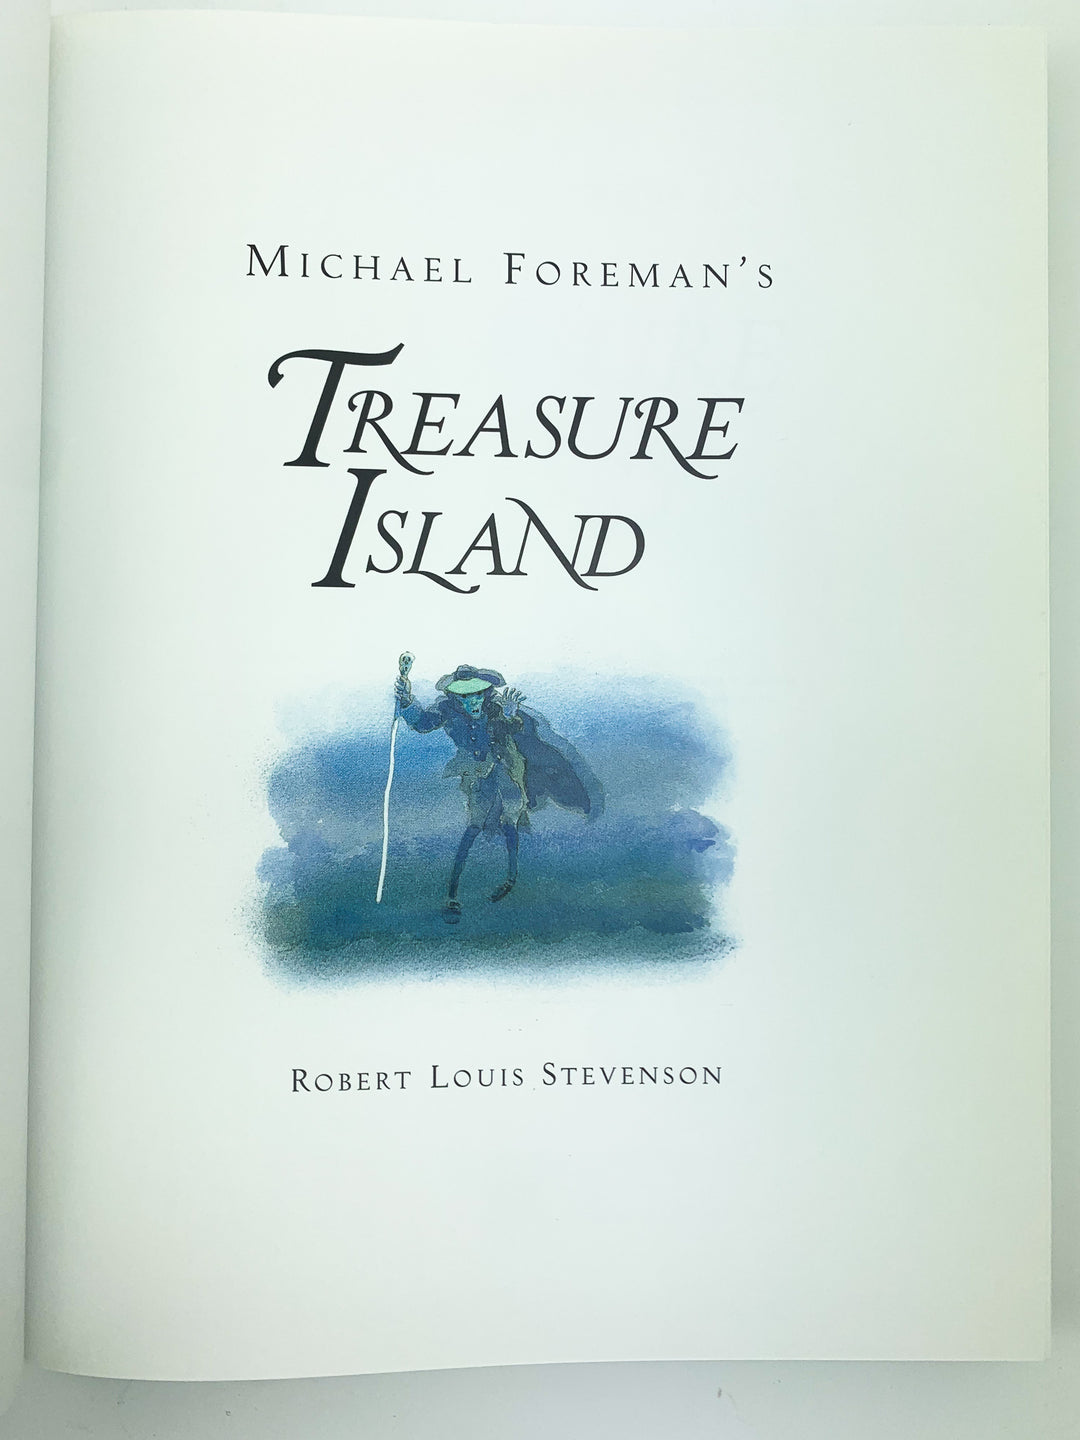 Stevenson, Robert Louis - Michael Foreman's Treasure Island